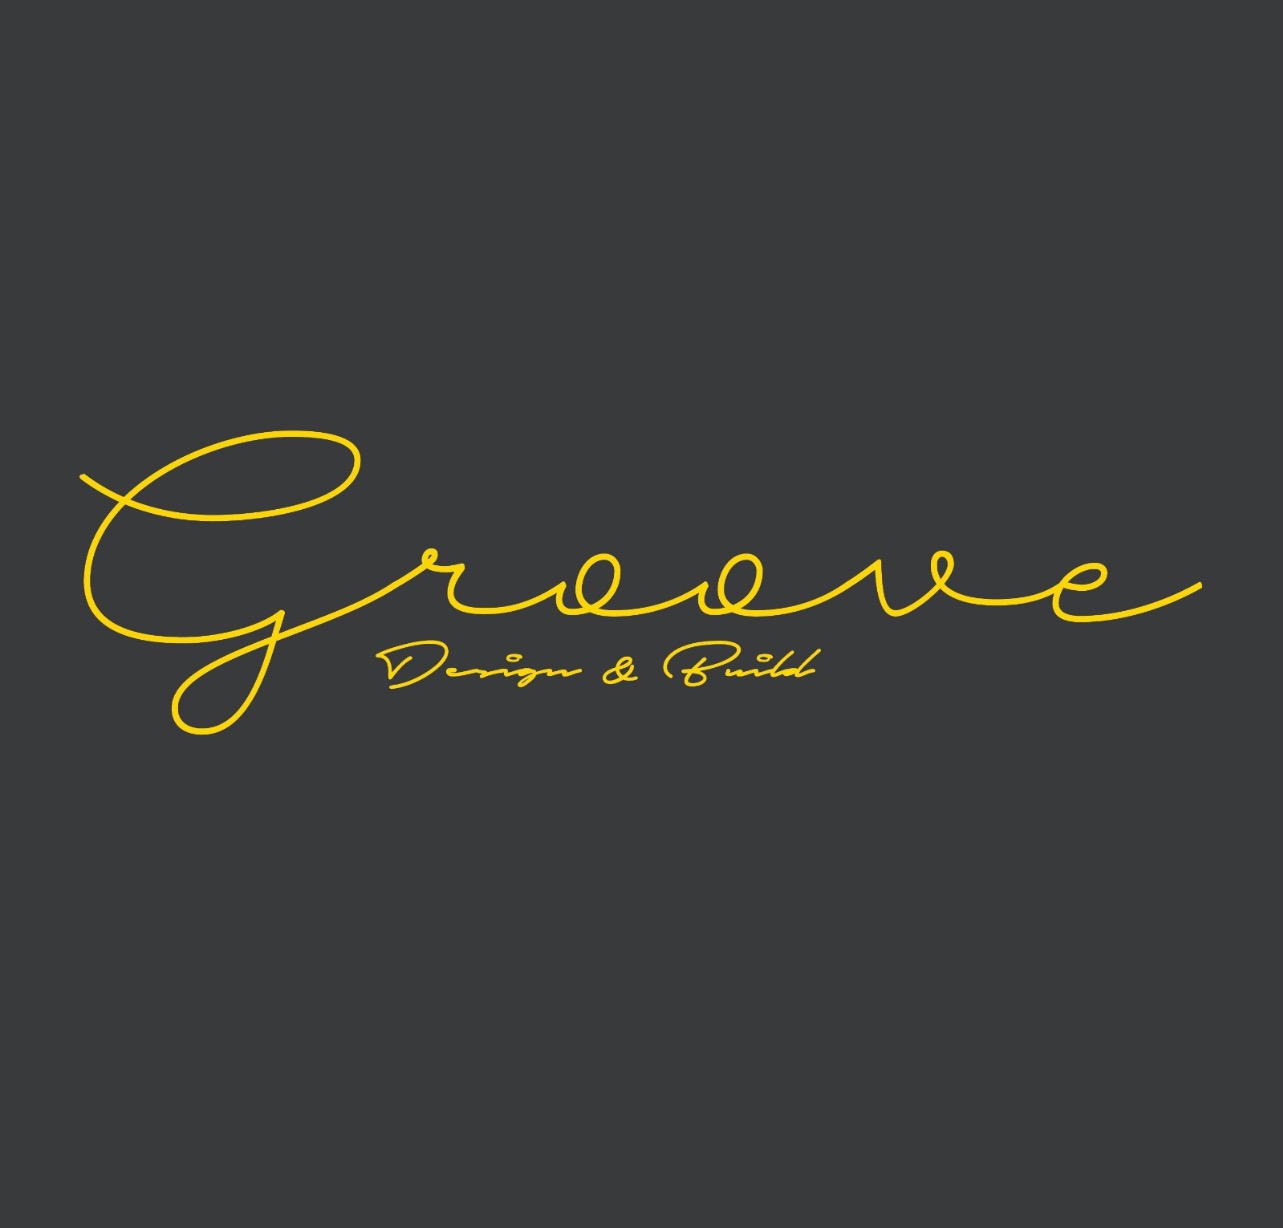 Groove Design & Build Pte. Ltd. logo